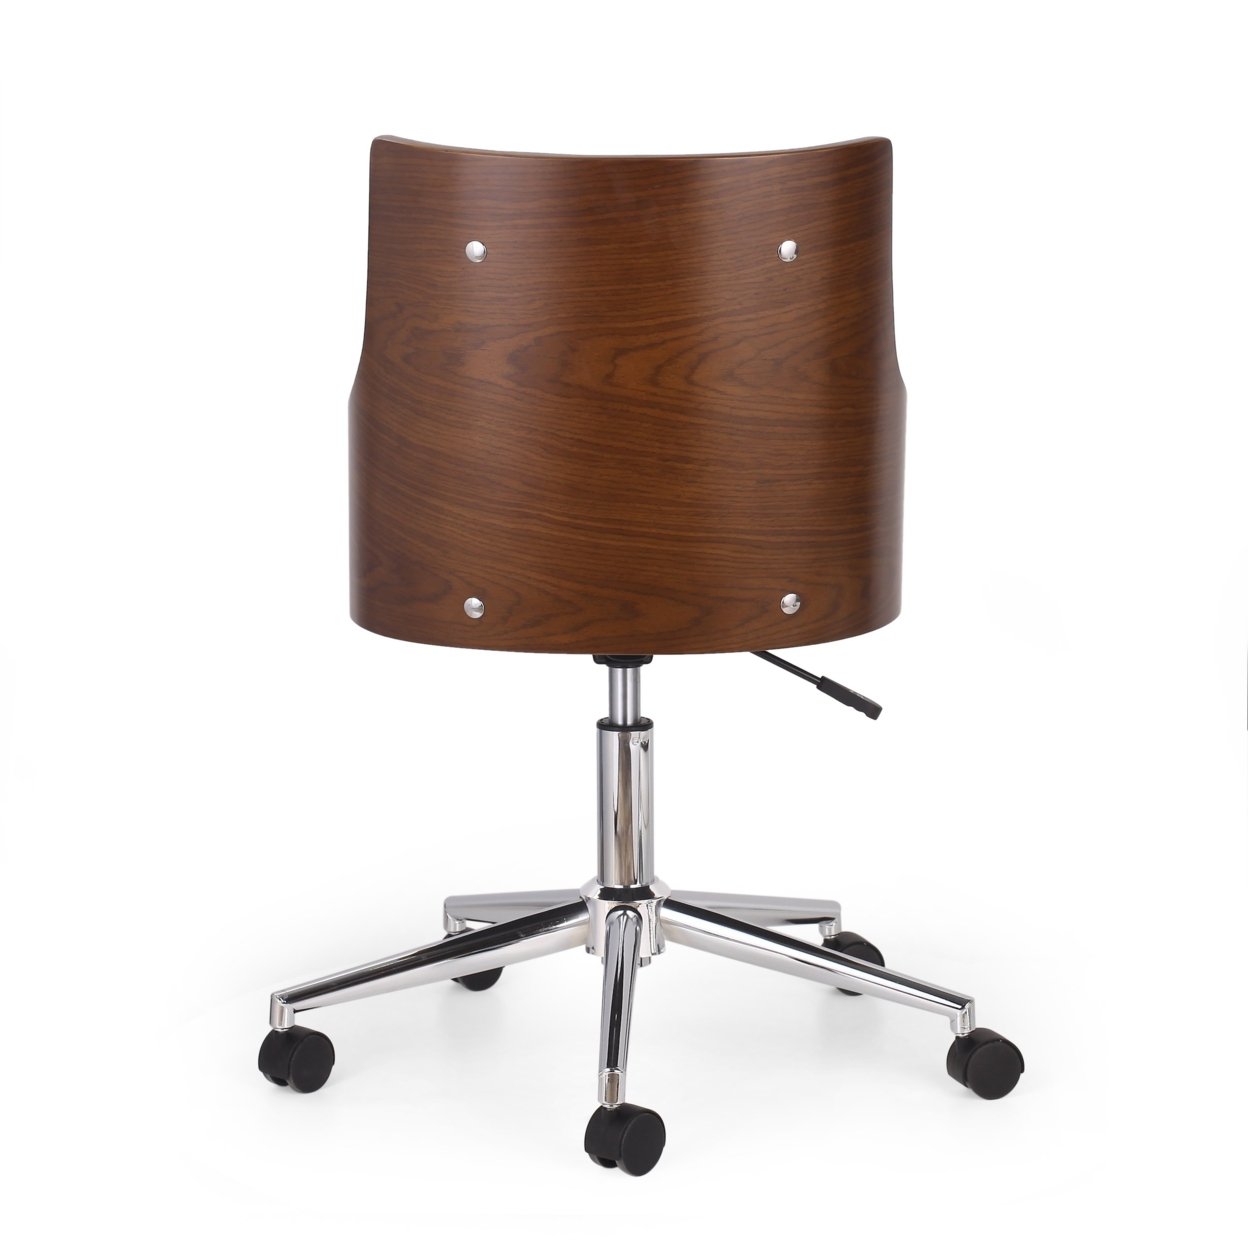 Arvilla Mid-Century Modern Upholstered Swivel Office Chair - Walnut/midnight/chrome